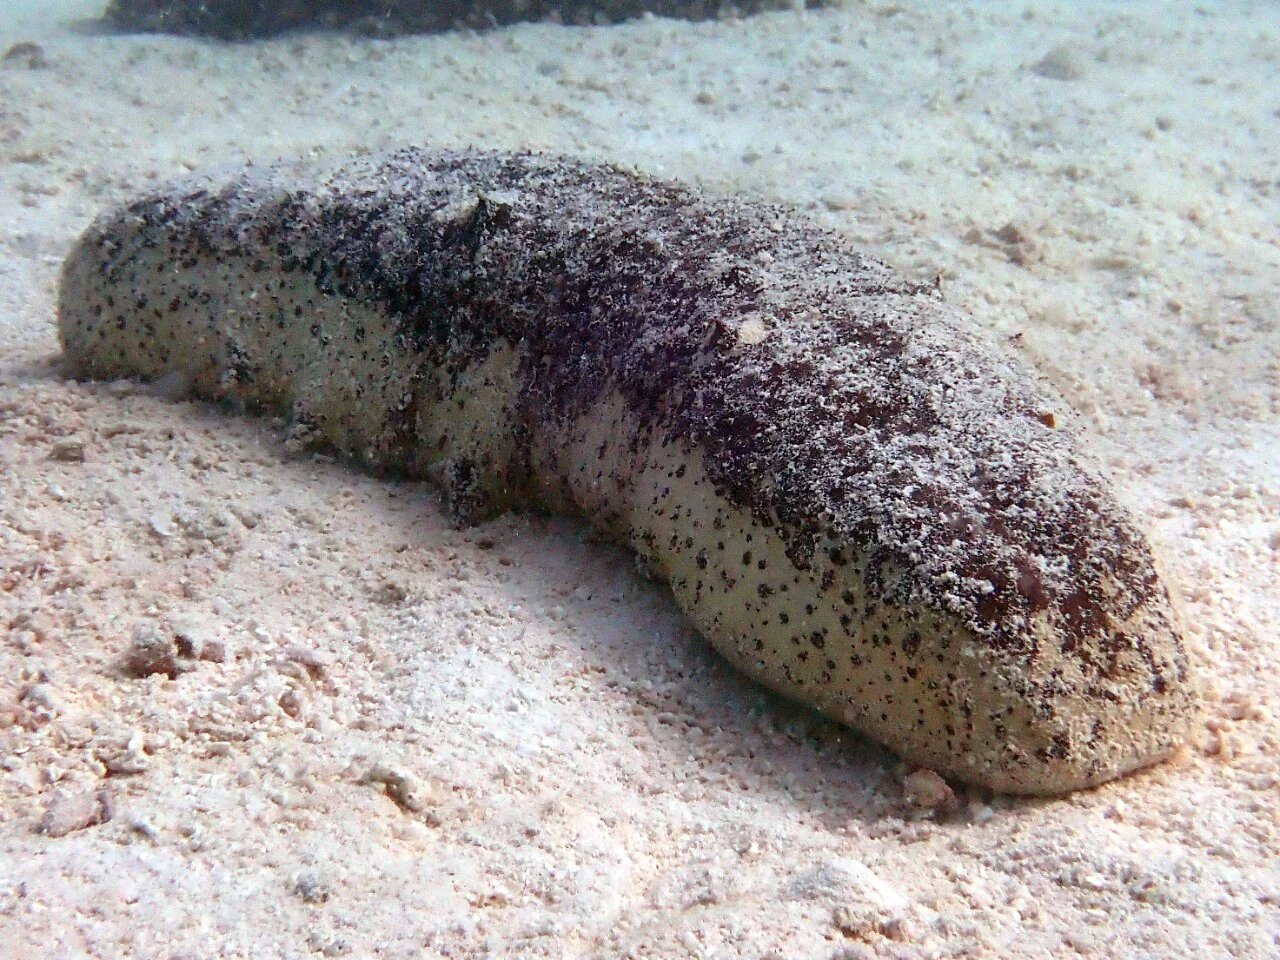 sea cucumber reproduction